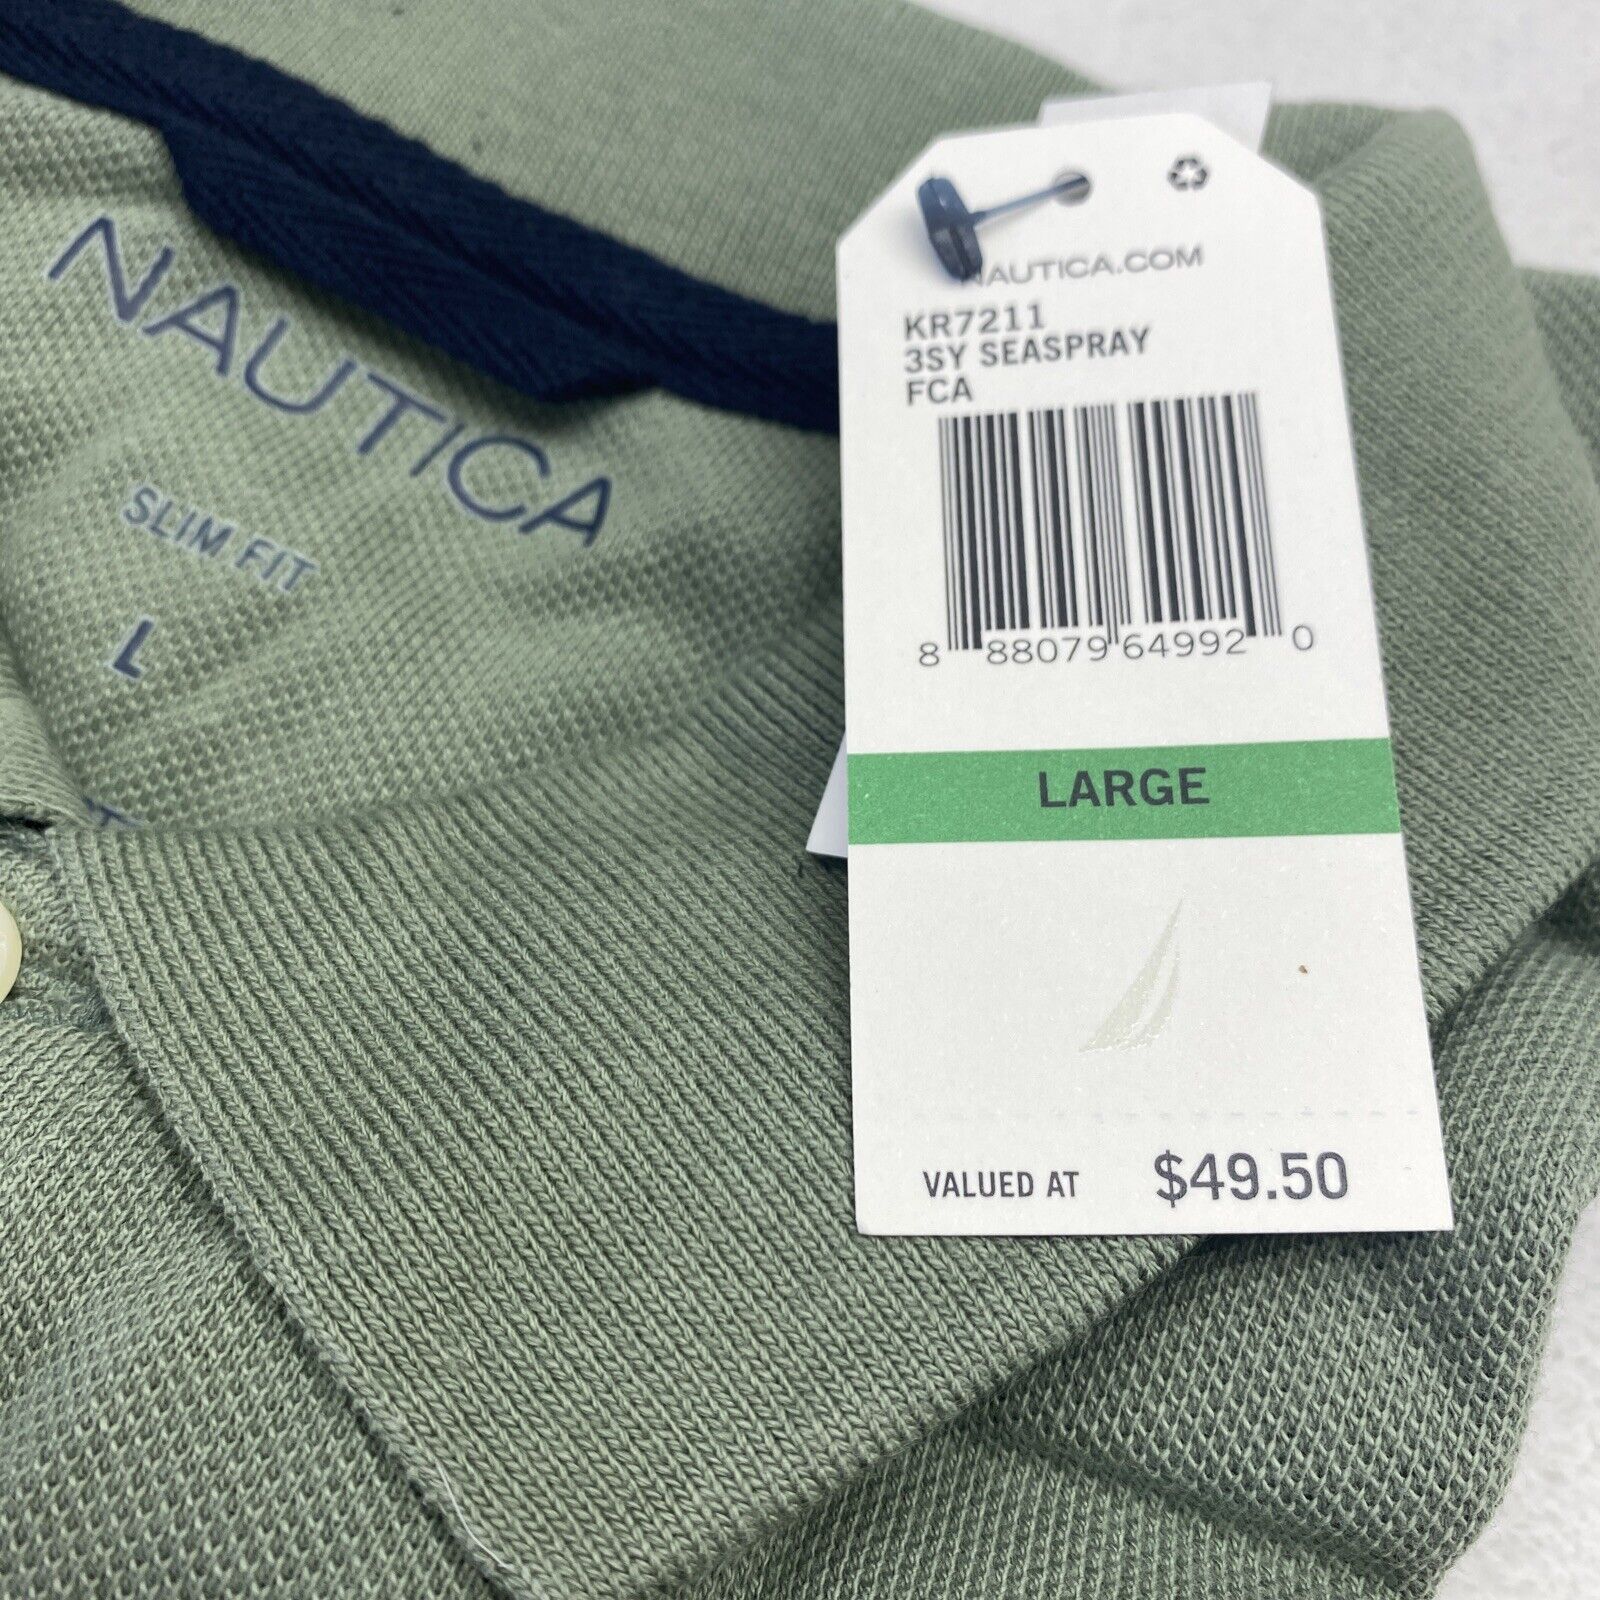 Nautica KR7211 Seaspray Short Sleeve Slim Fit Polo Shirt Mens Size